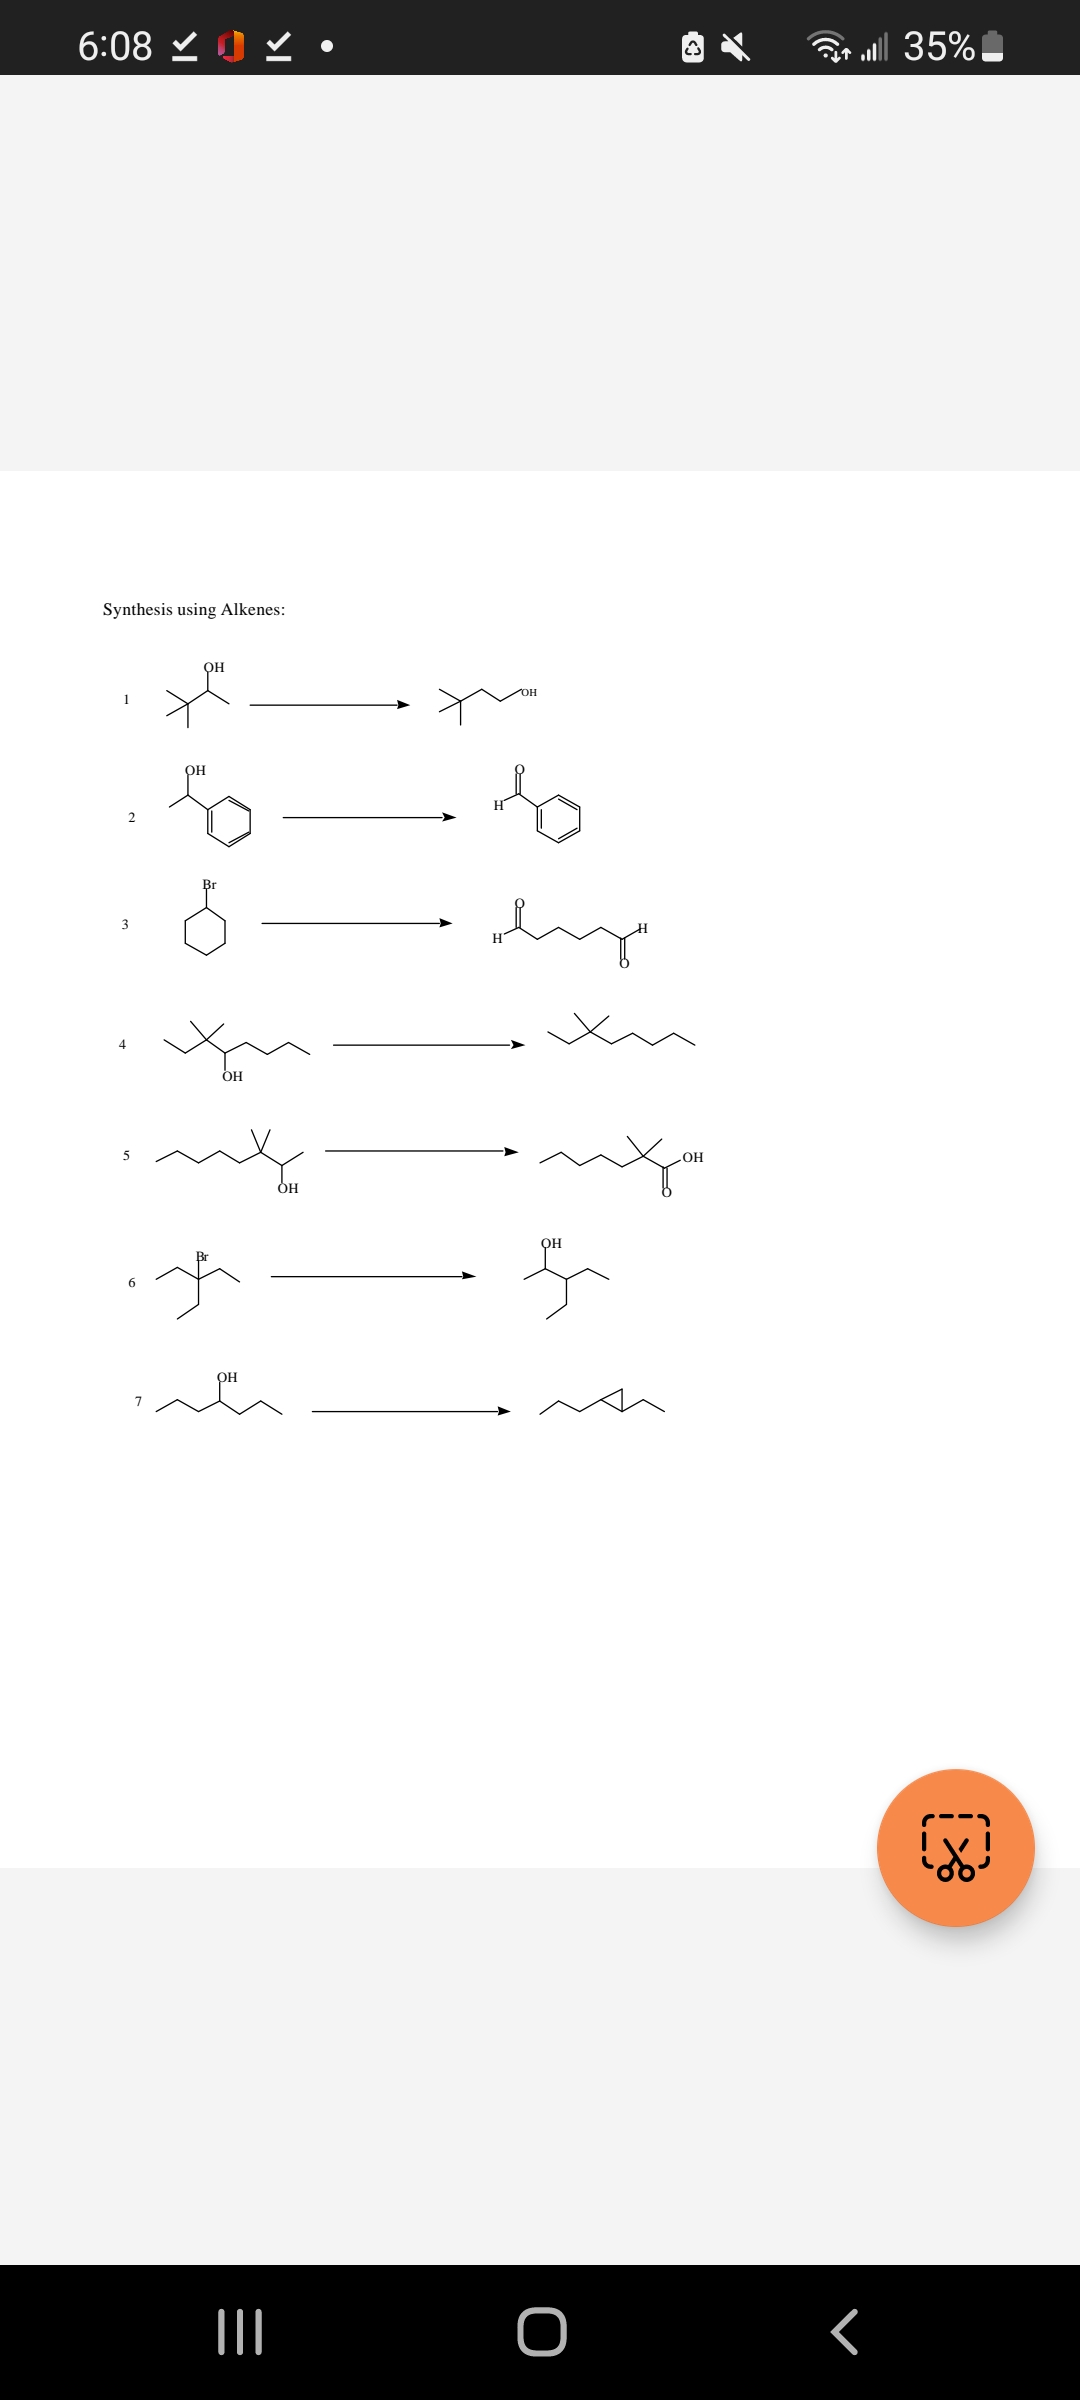 ➤ 80:9
Synthesis using Alkenes:
2
5
6
ОН
*
OH
Ő
НО
qu
х
OH
OH
д
лук
fu
ОН
х
о
НО
Г
. 35%